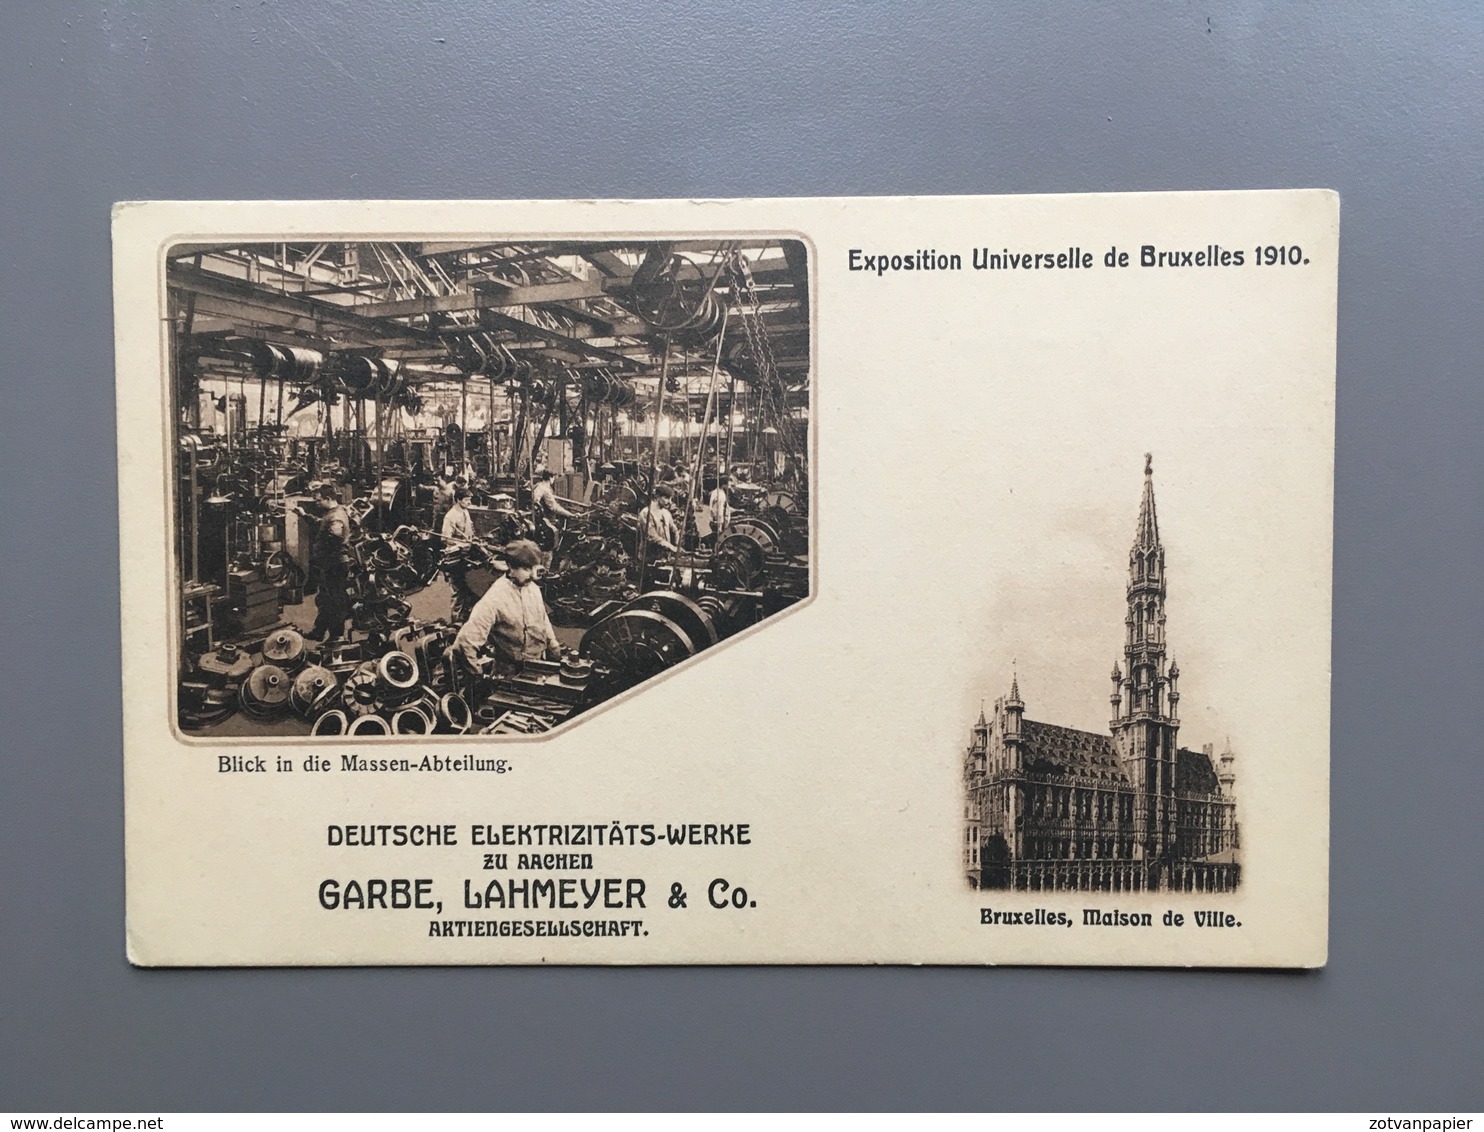 AACHEN - AKEN - Deutsche Elektrizitäts-werke - Garbe - Lahmeyer - Exposition Universelle De Bruxelles 1910 - Aken